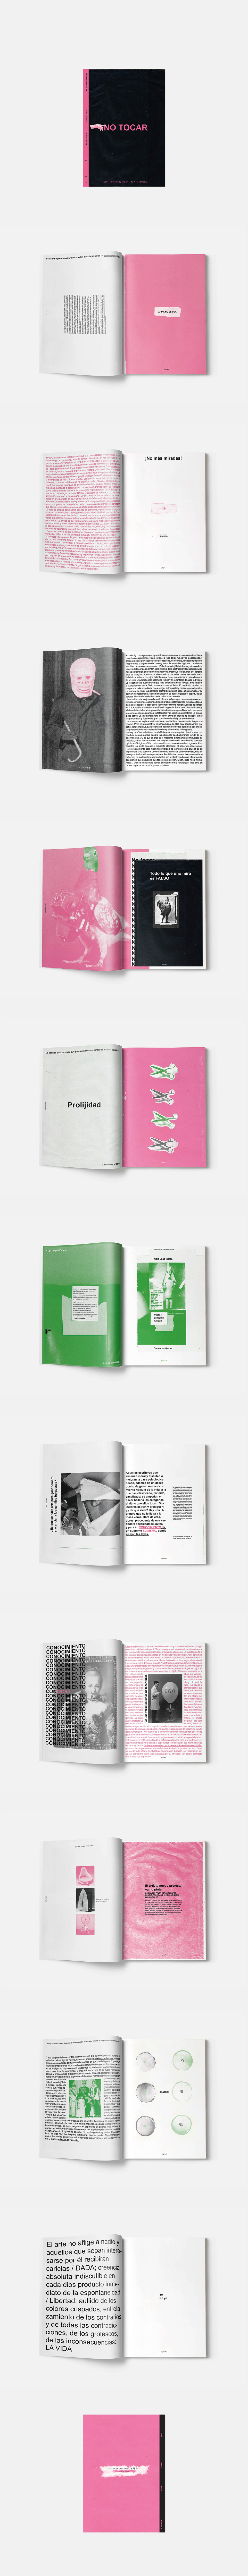 fanzine editorial tipografia typography   collage manifiesto Dada catedra gabriele Diseño II